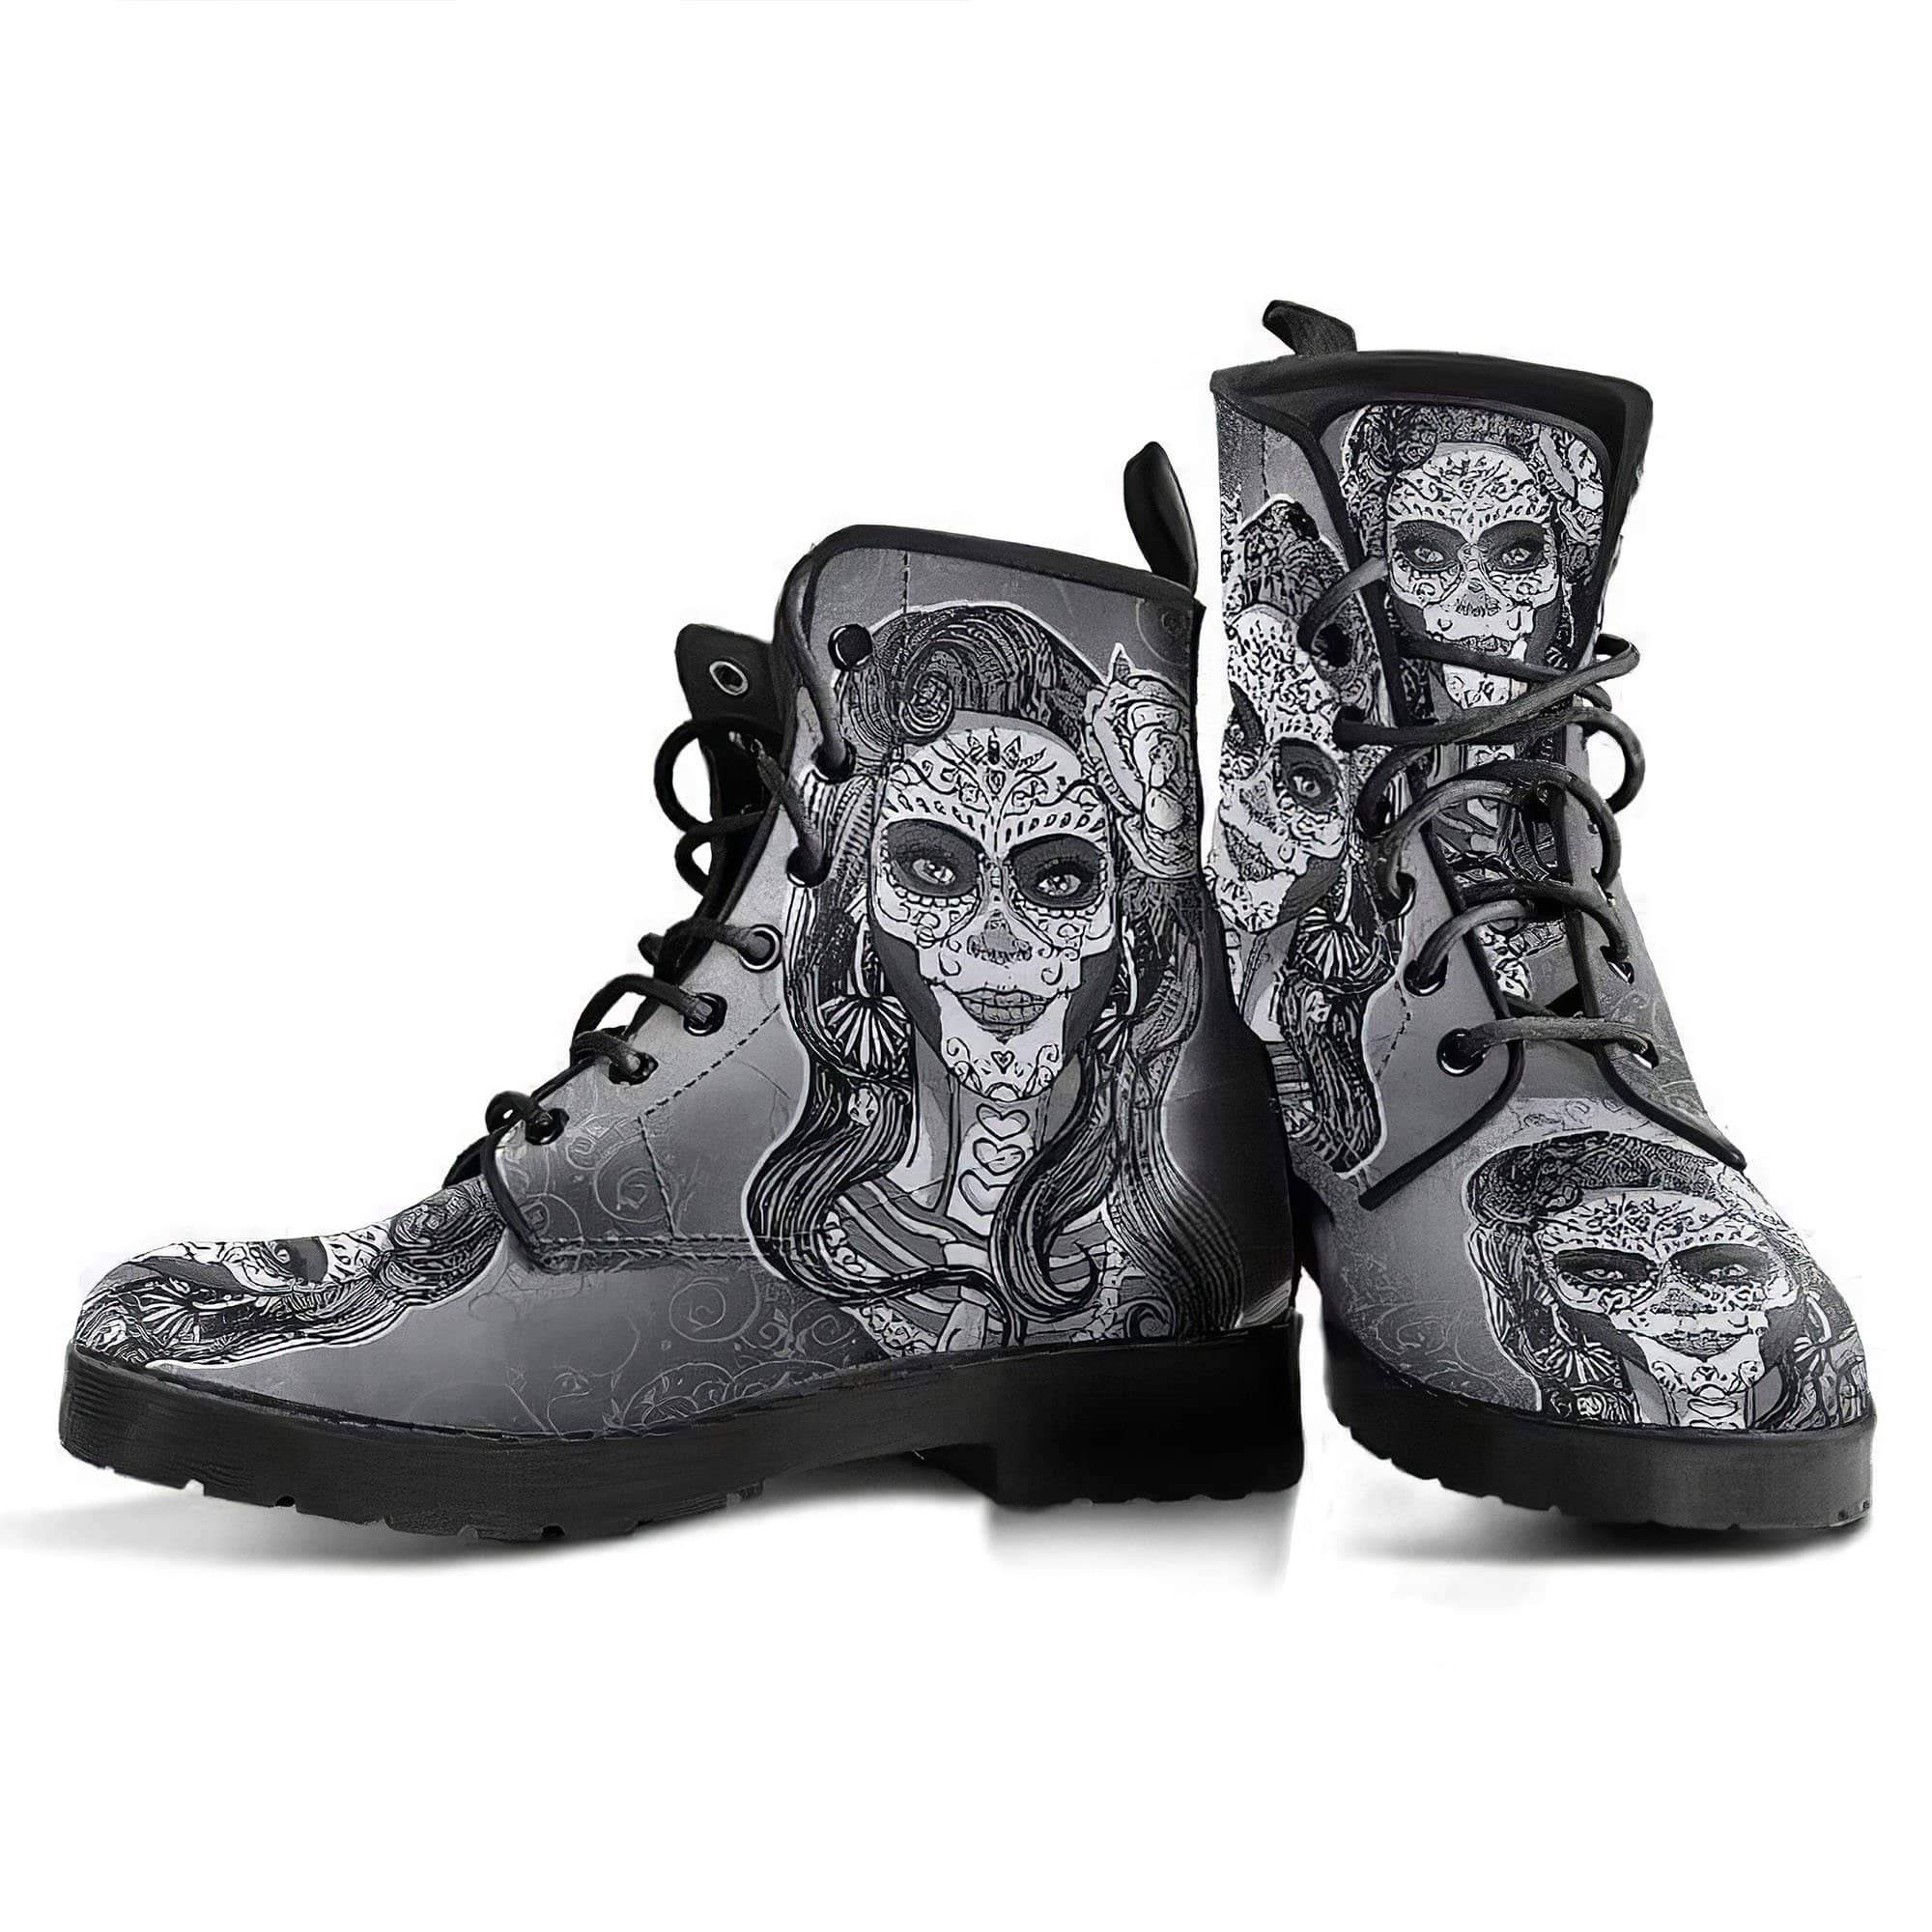 sugarskull-3-women-s-boots-vegan-friendly-leather-women-s-leather-boots-12051953745981.jpg